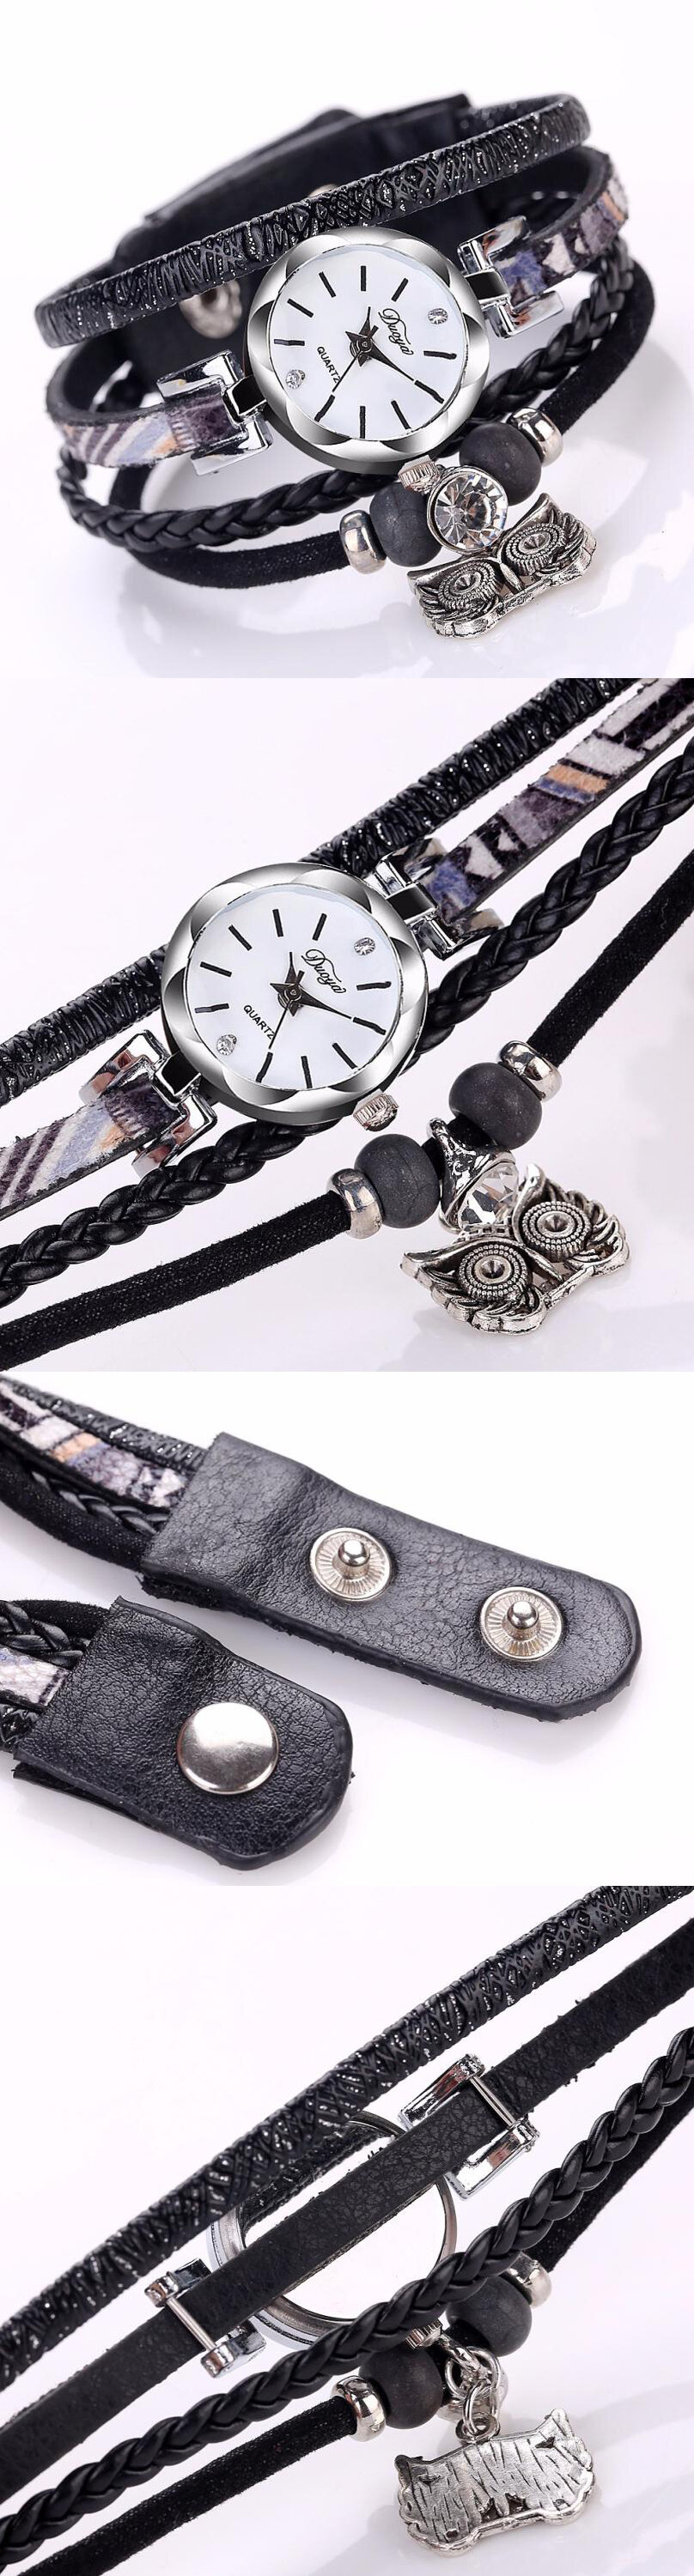 Bohemian Style Cute Owl Pendant Leather Bracelet Watch Trendy Multilayer Wrist Watches for Women